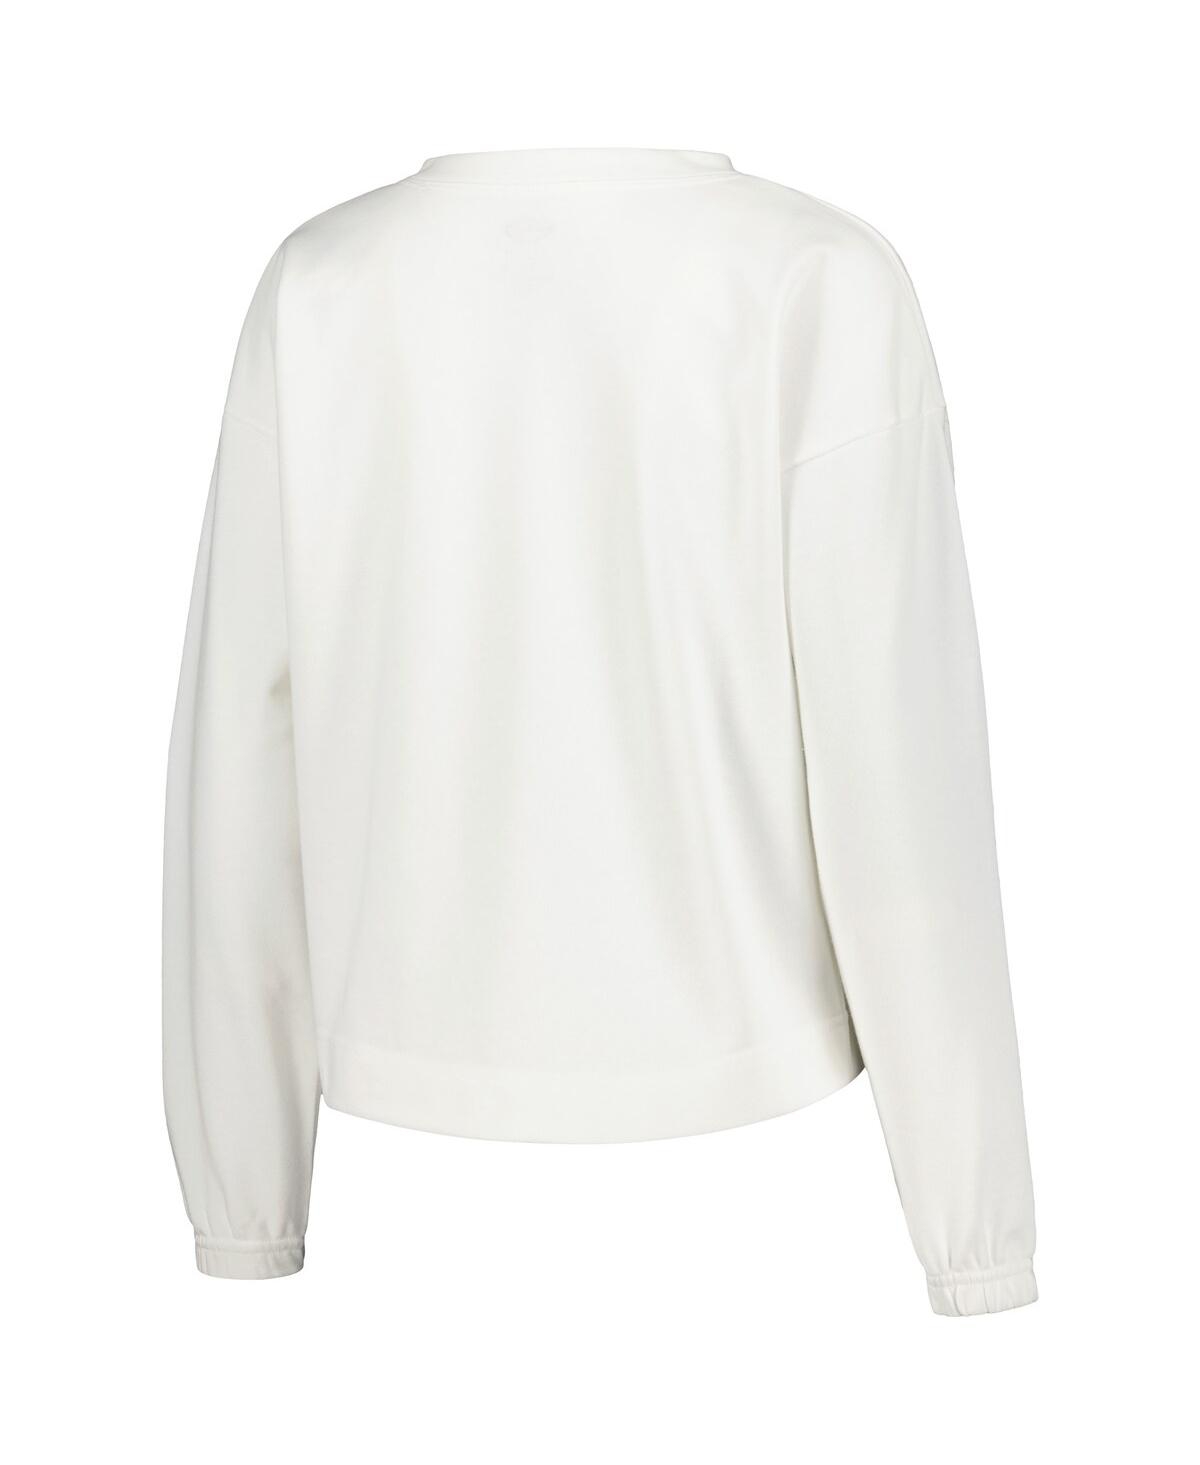 Shop Concepts Sport Women's  White Nashville Sc Sunray Notch Neck Long Sleeve T-shirt